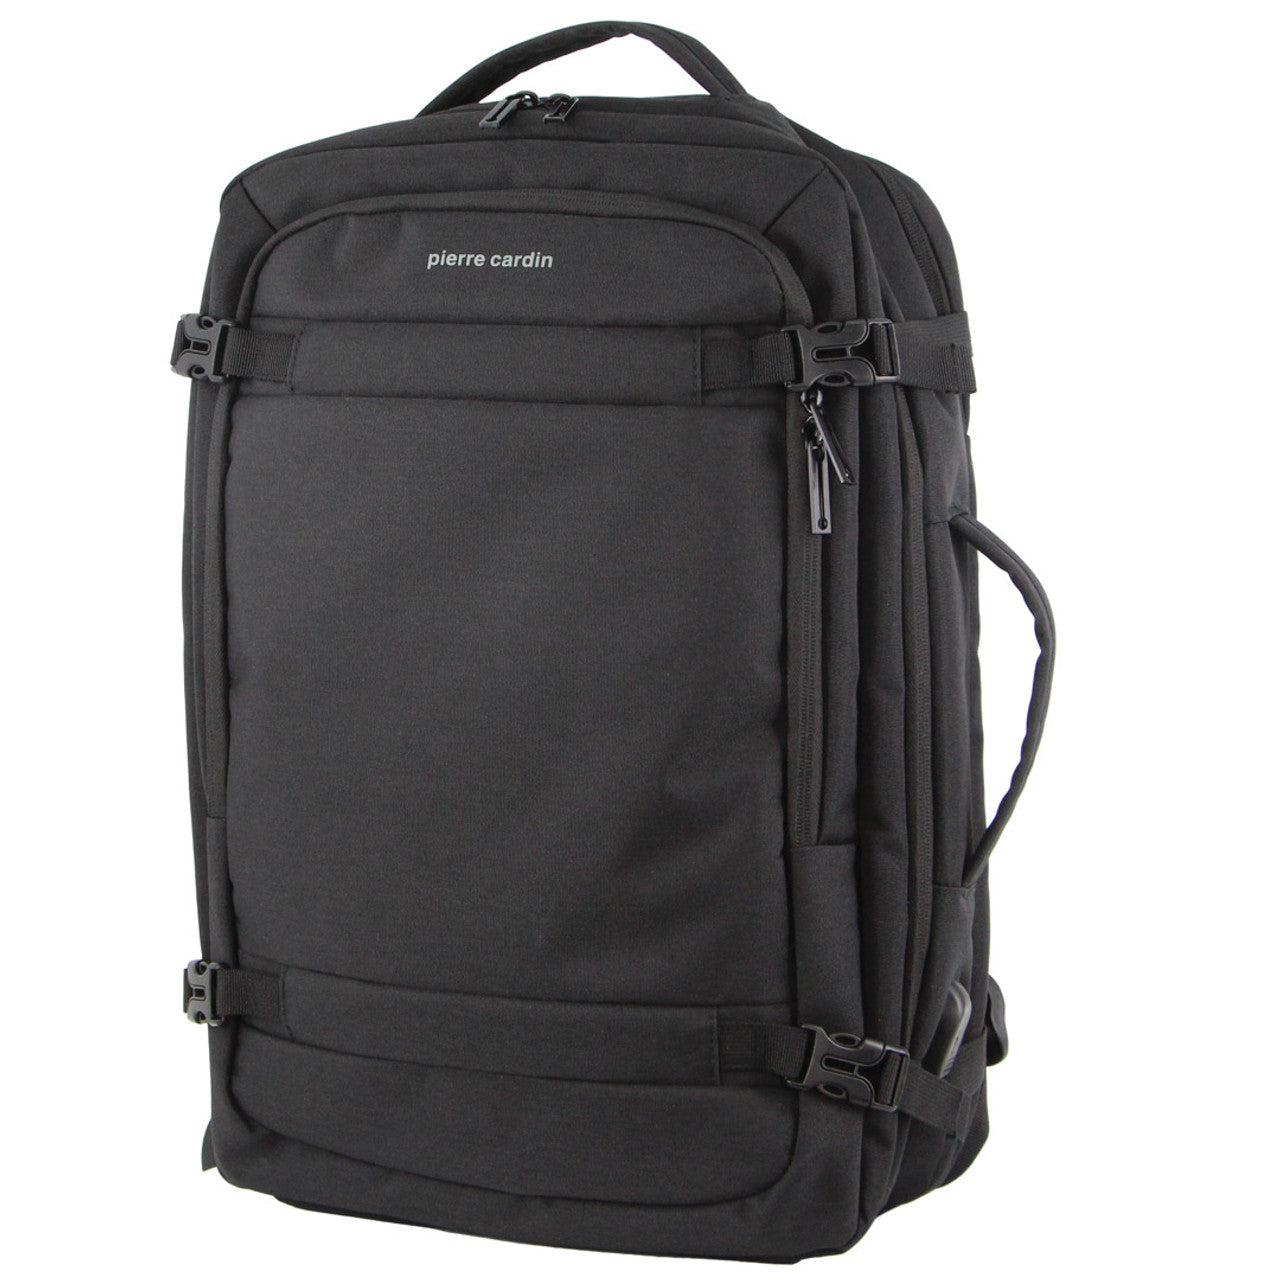 Pierre Cardin - PC3626 Travel Laptop backpack w USB port - Black